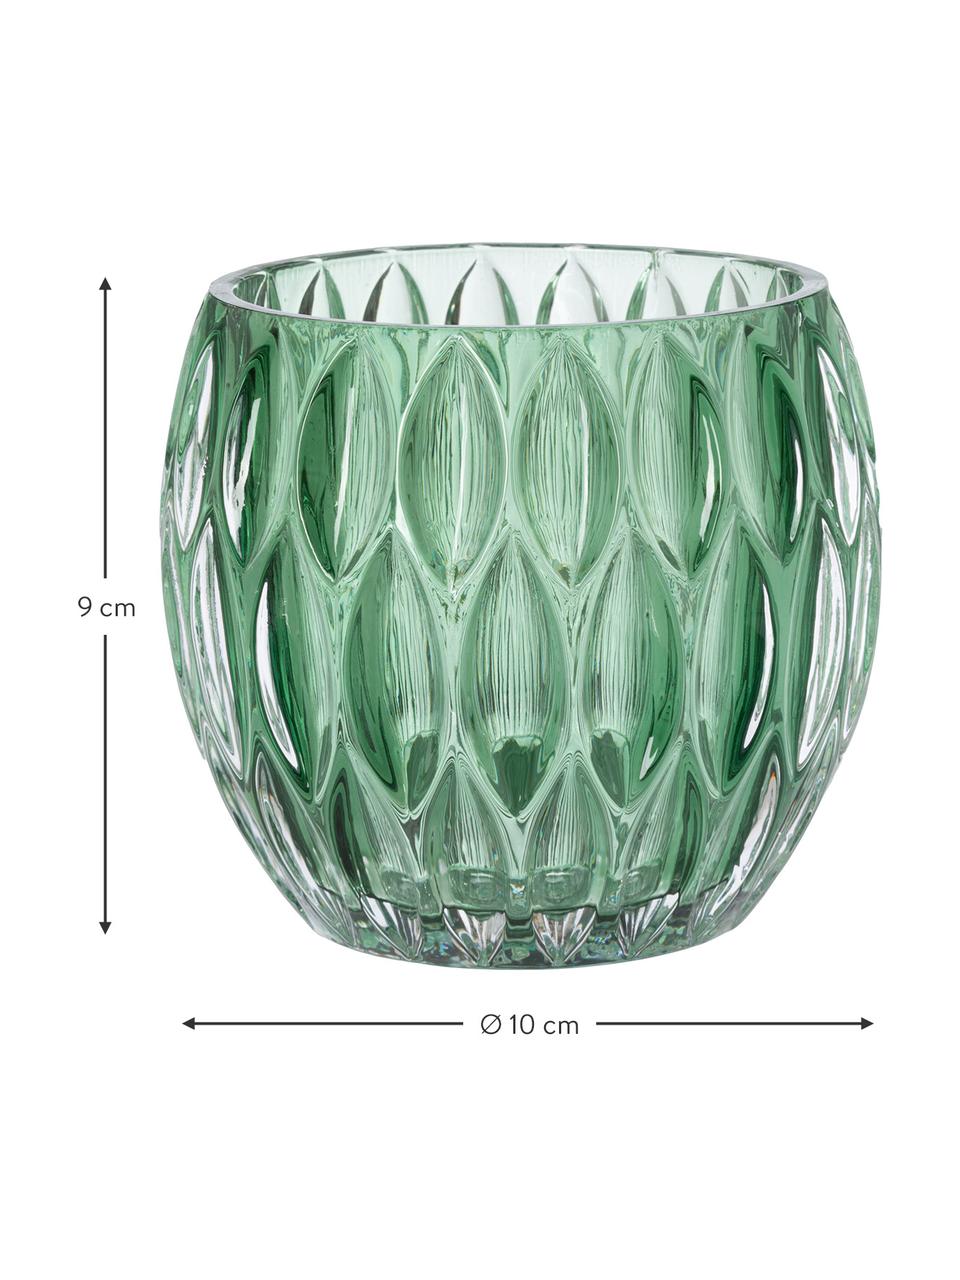 Teelichthalter-Set Aliza in Grün, 3-tlg., Glas, Grüntöne, Transparent, Je Ø 10 x H 9 cm